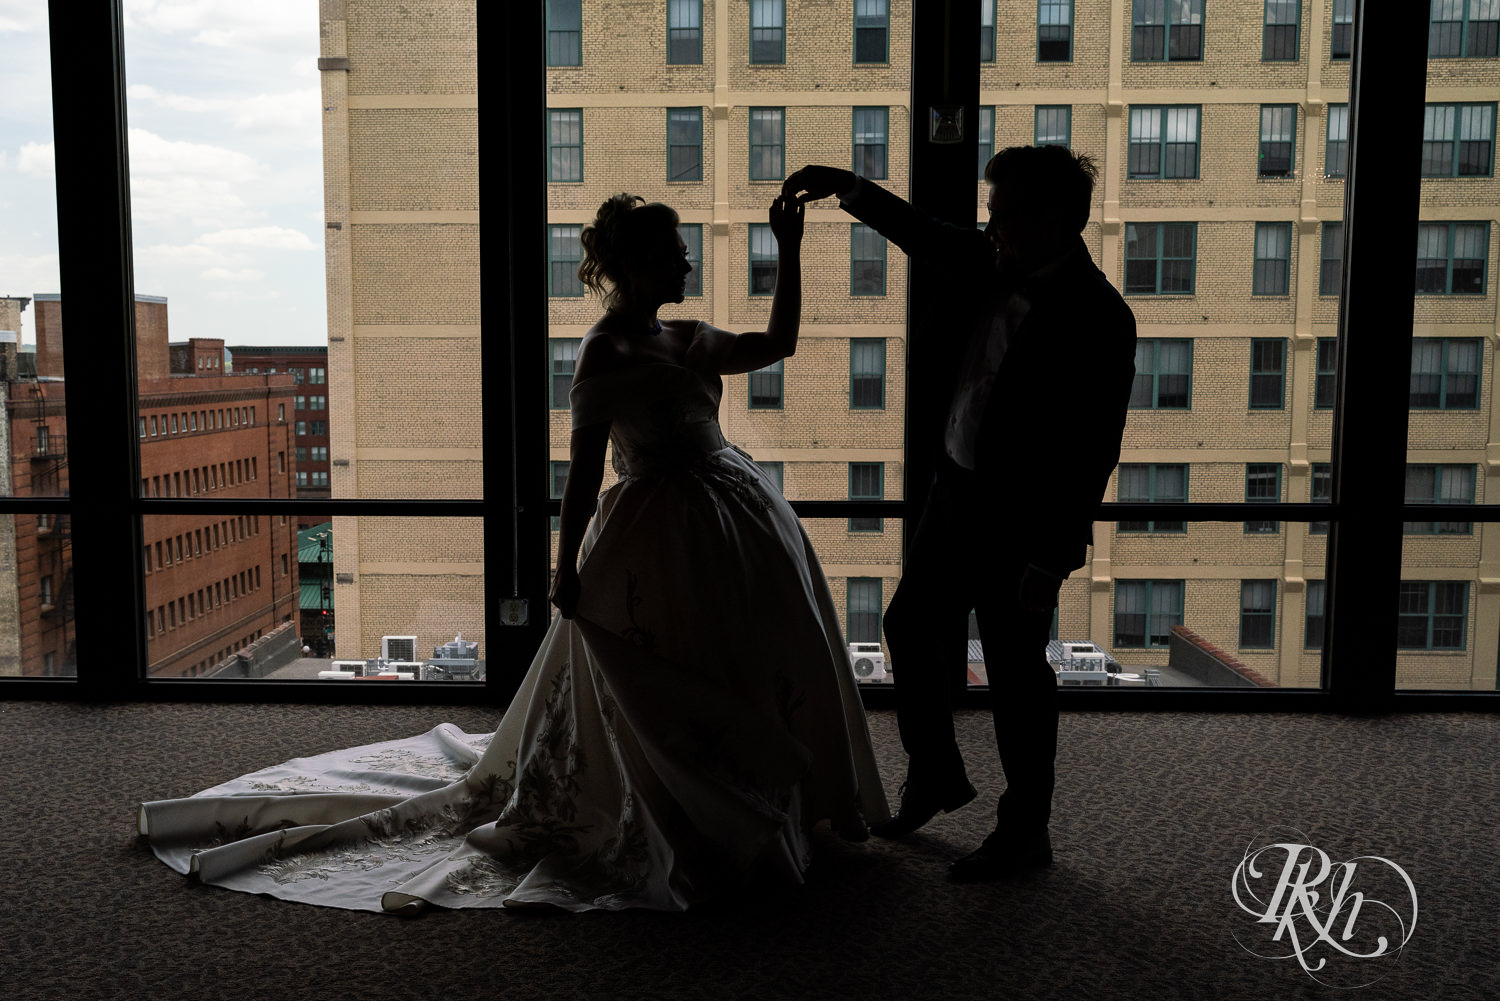 Bride and groom dance in silhouette at Abulae in Saint Paul, Minnesota.